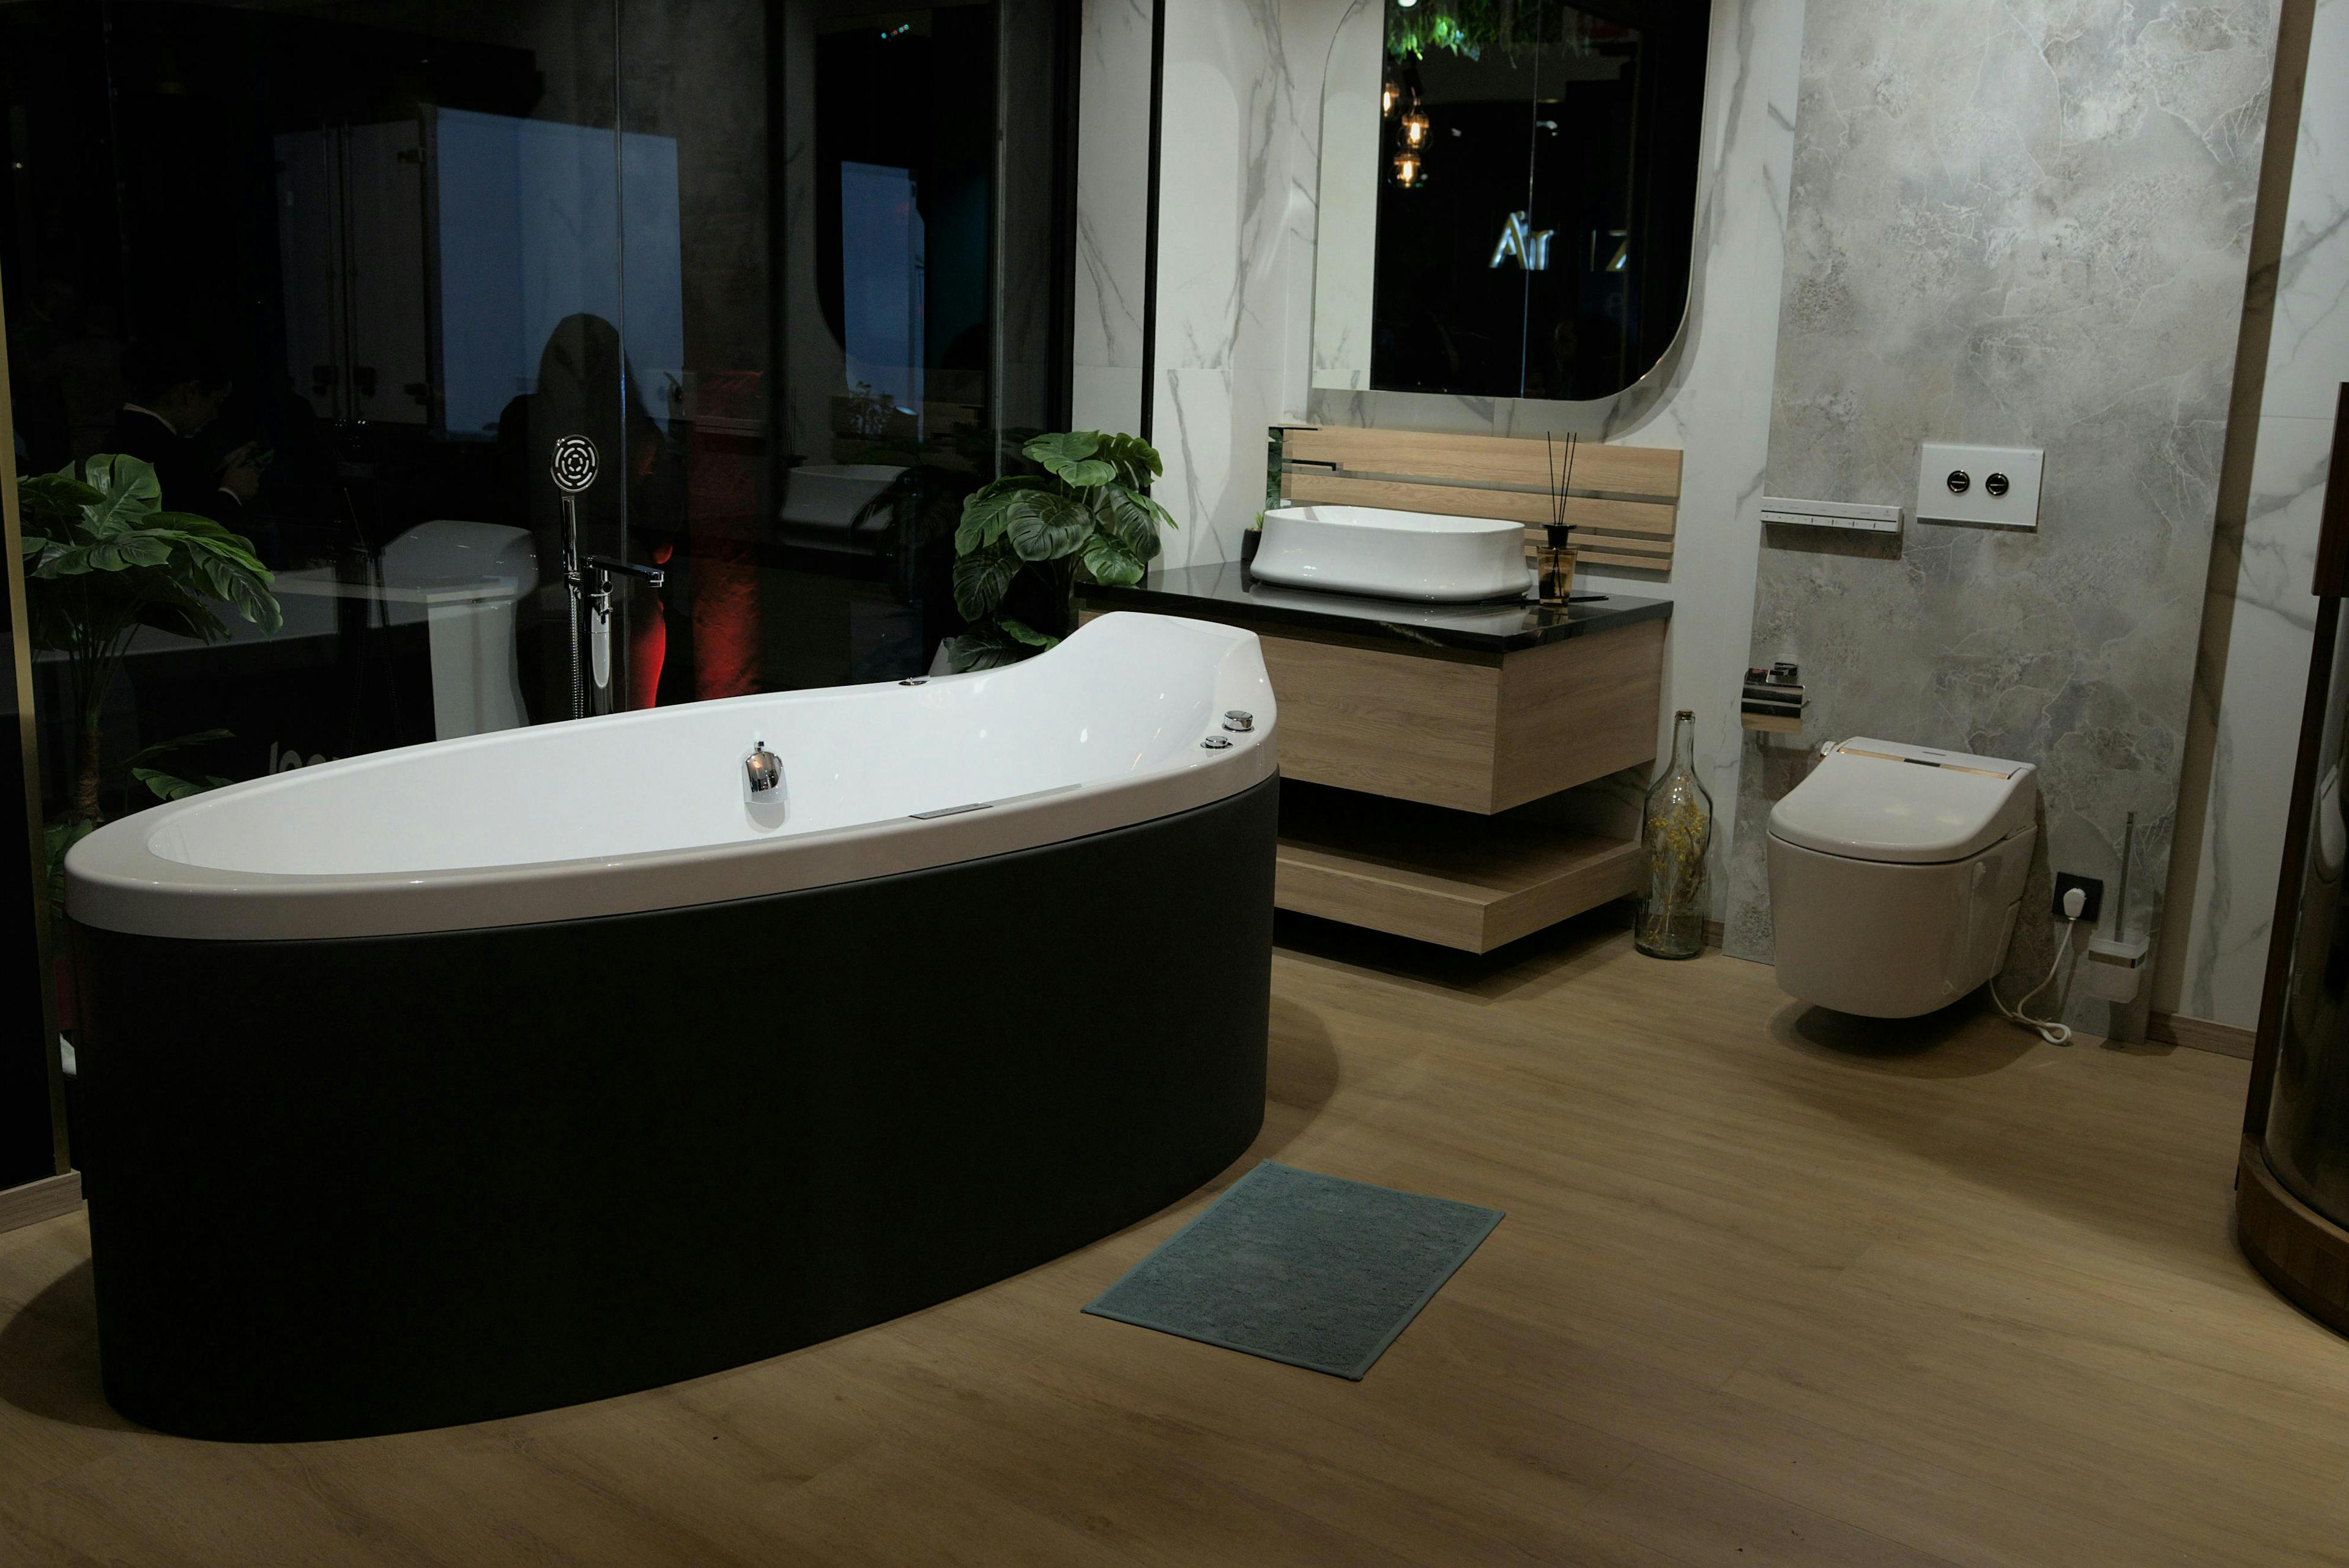 floor flooring tub bathing bathtub person interior design wood hardwood hot tub